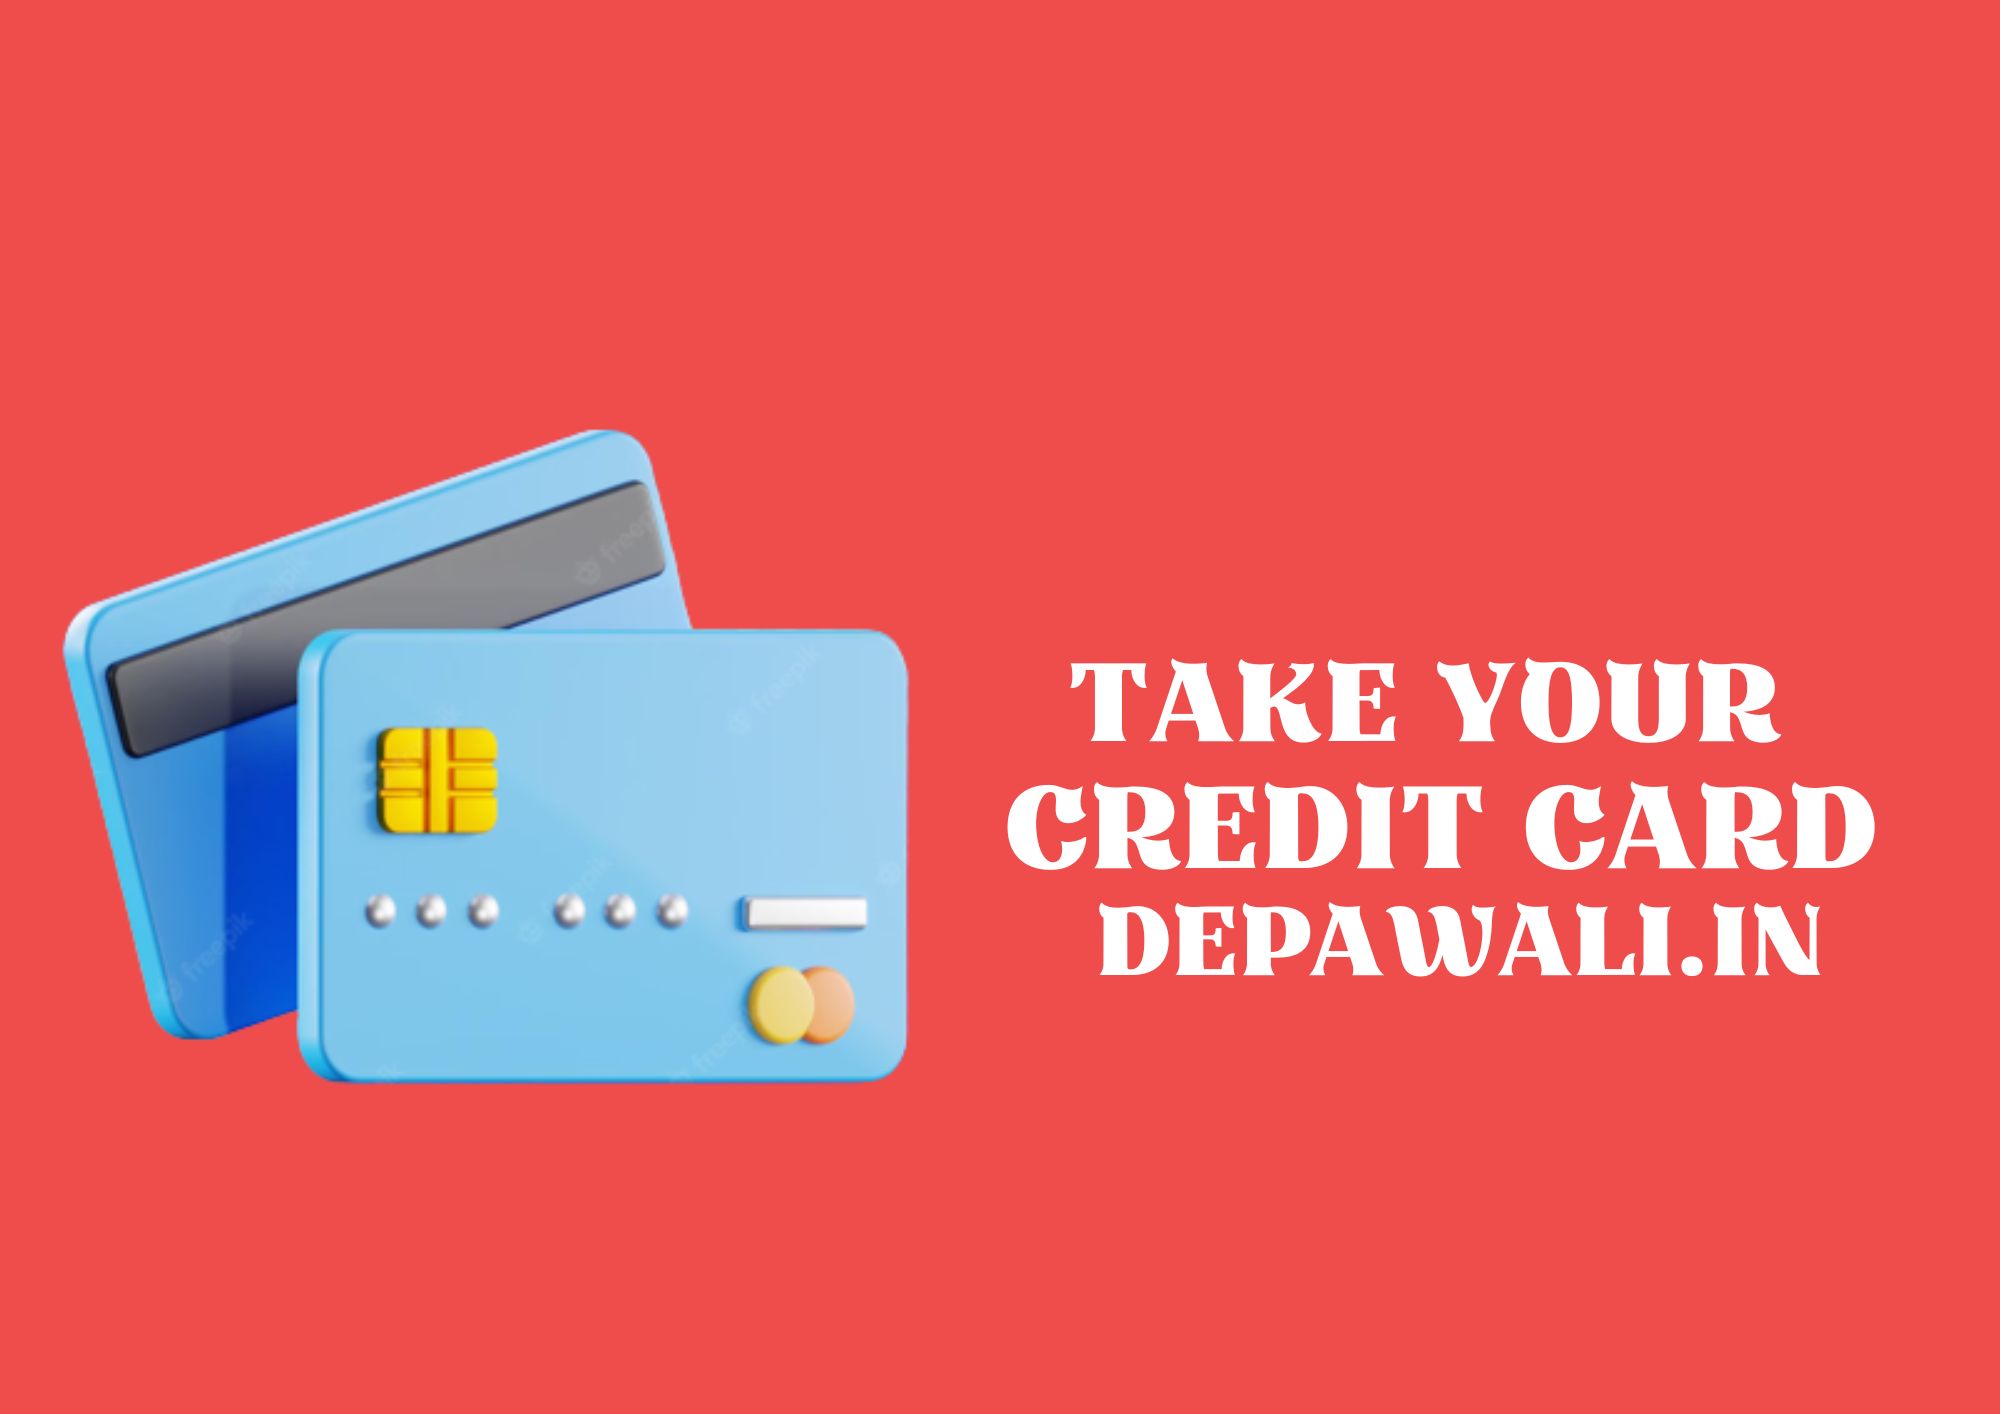 क्रेडिट कार्ड क्या है? इसके फायदे और नुकसान - (What Is Credit Card In Hindi) - Credit Card Kya Hai In Hindi